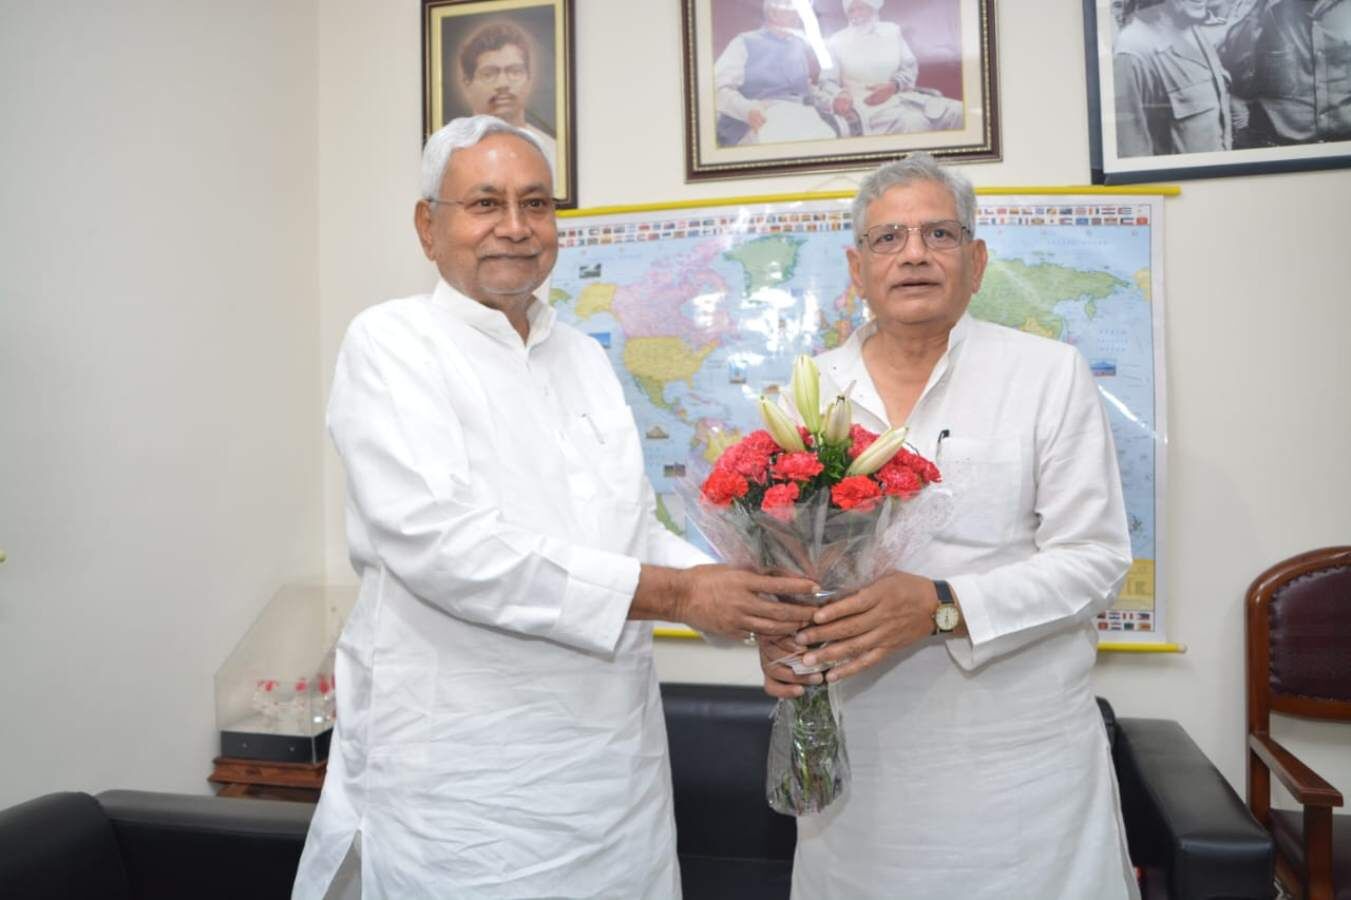 Nitish Kumar Delhi Visit: Bihar CM met CPM leader Sitaram Yechury, said on the post of PM – no such desire